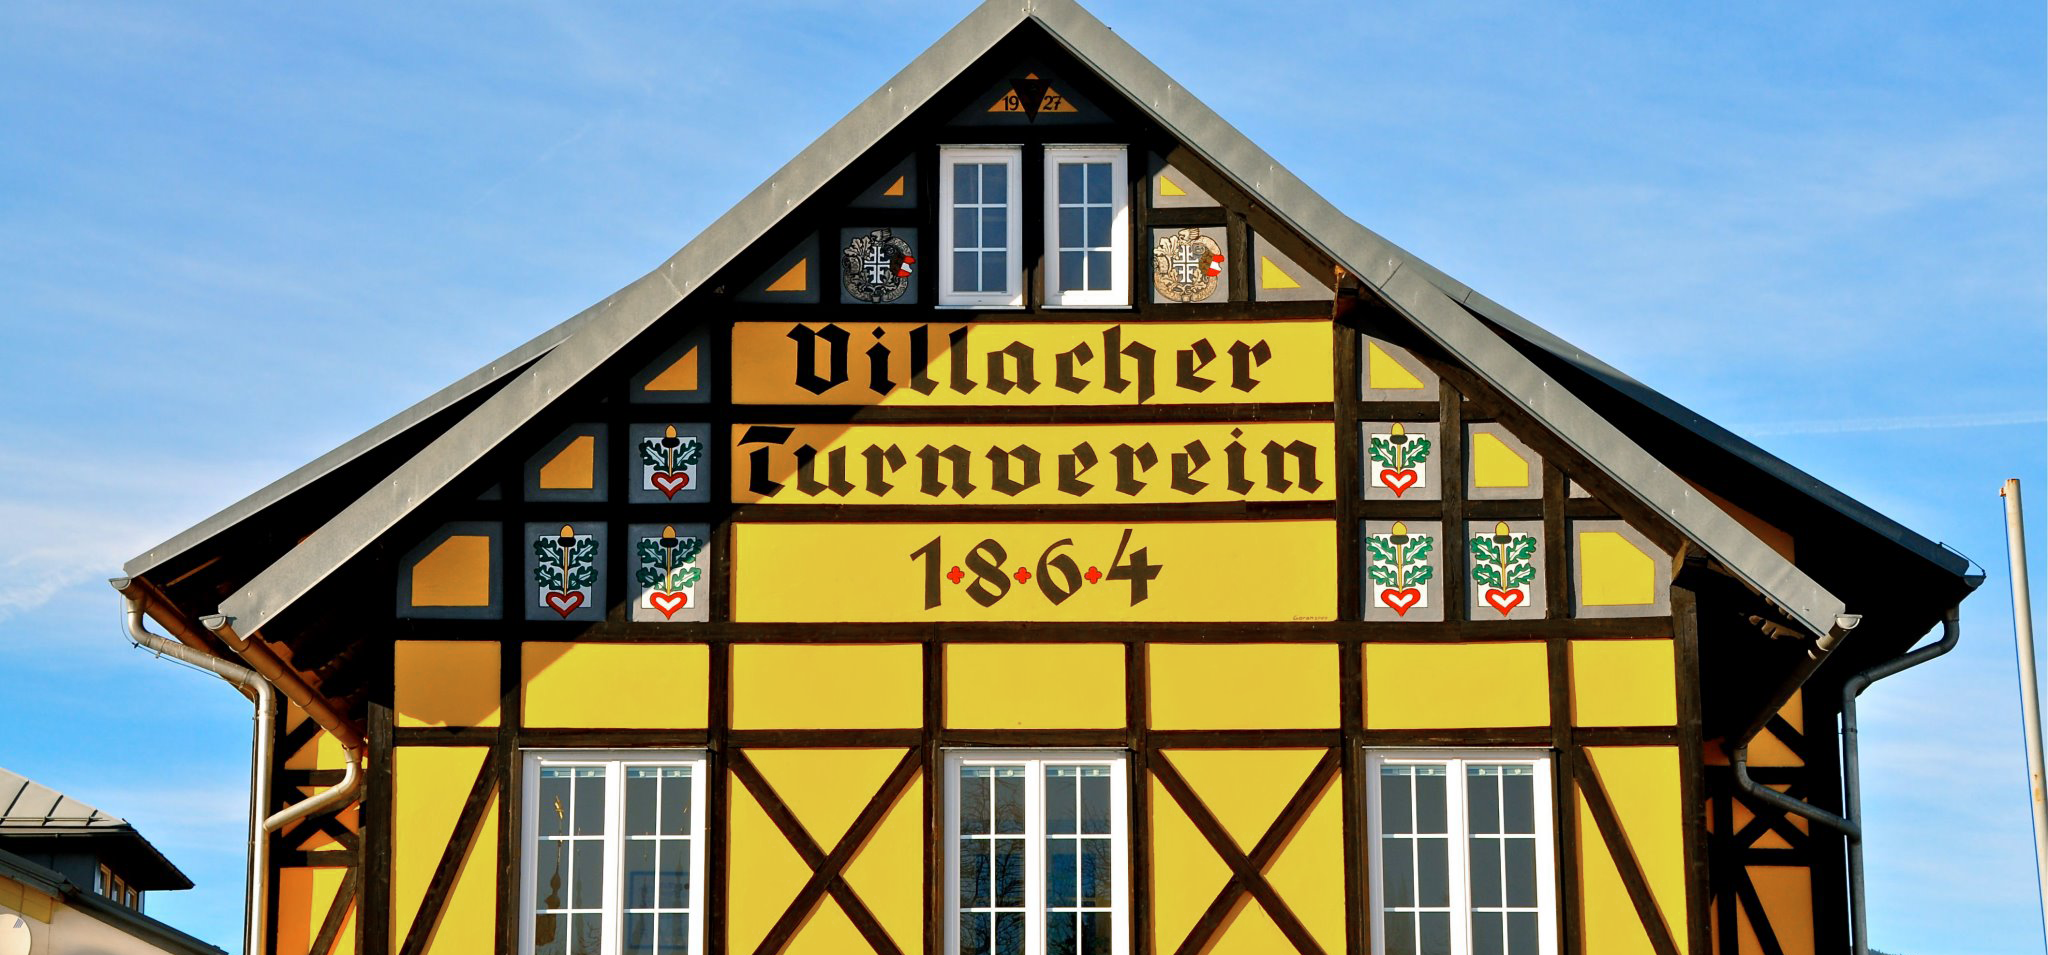 http://www.turnverein-villach.at/wp-content/uploads/2017/01/Header_Turnverein.png